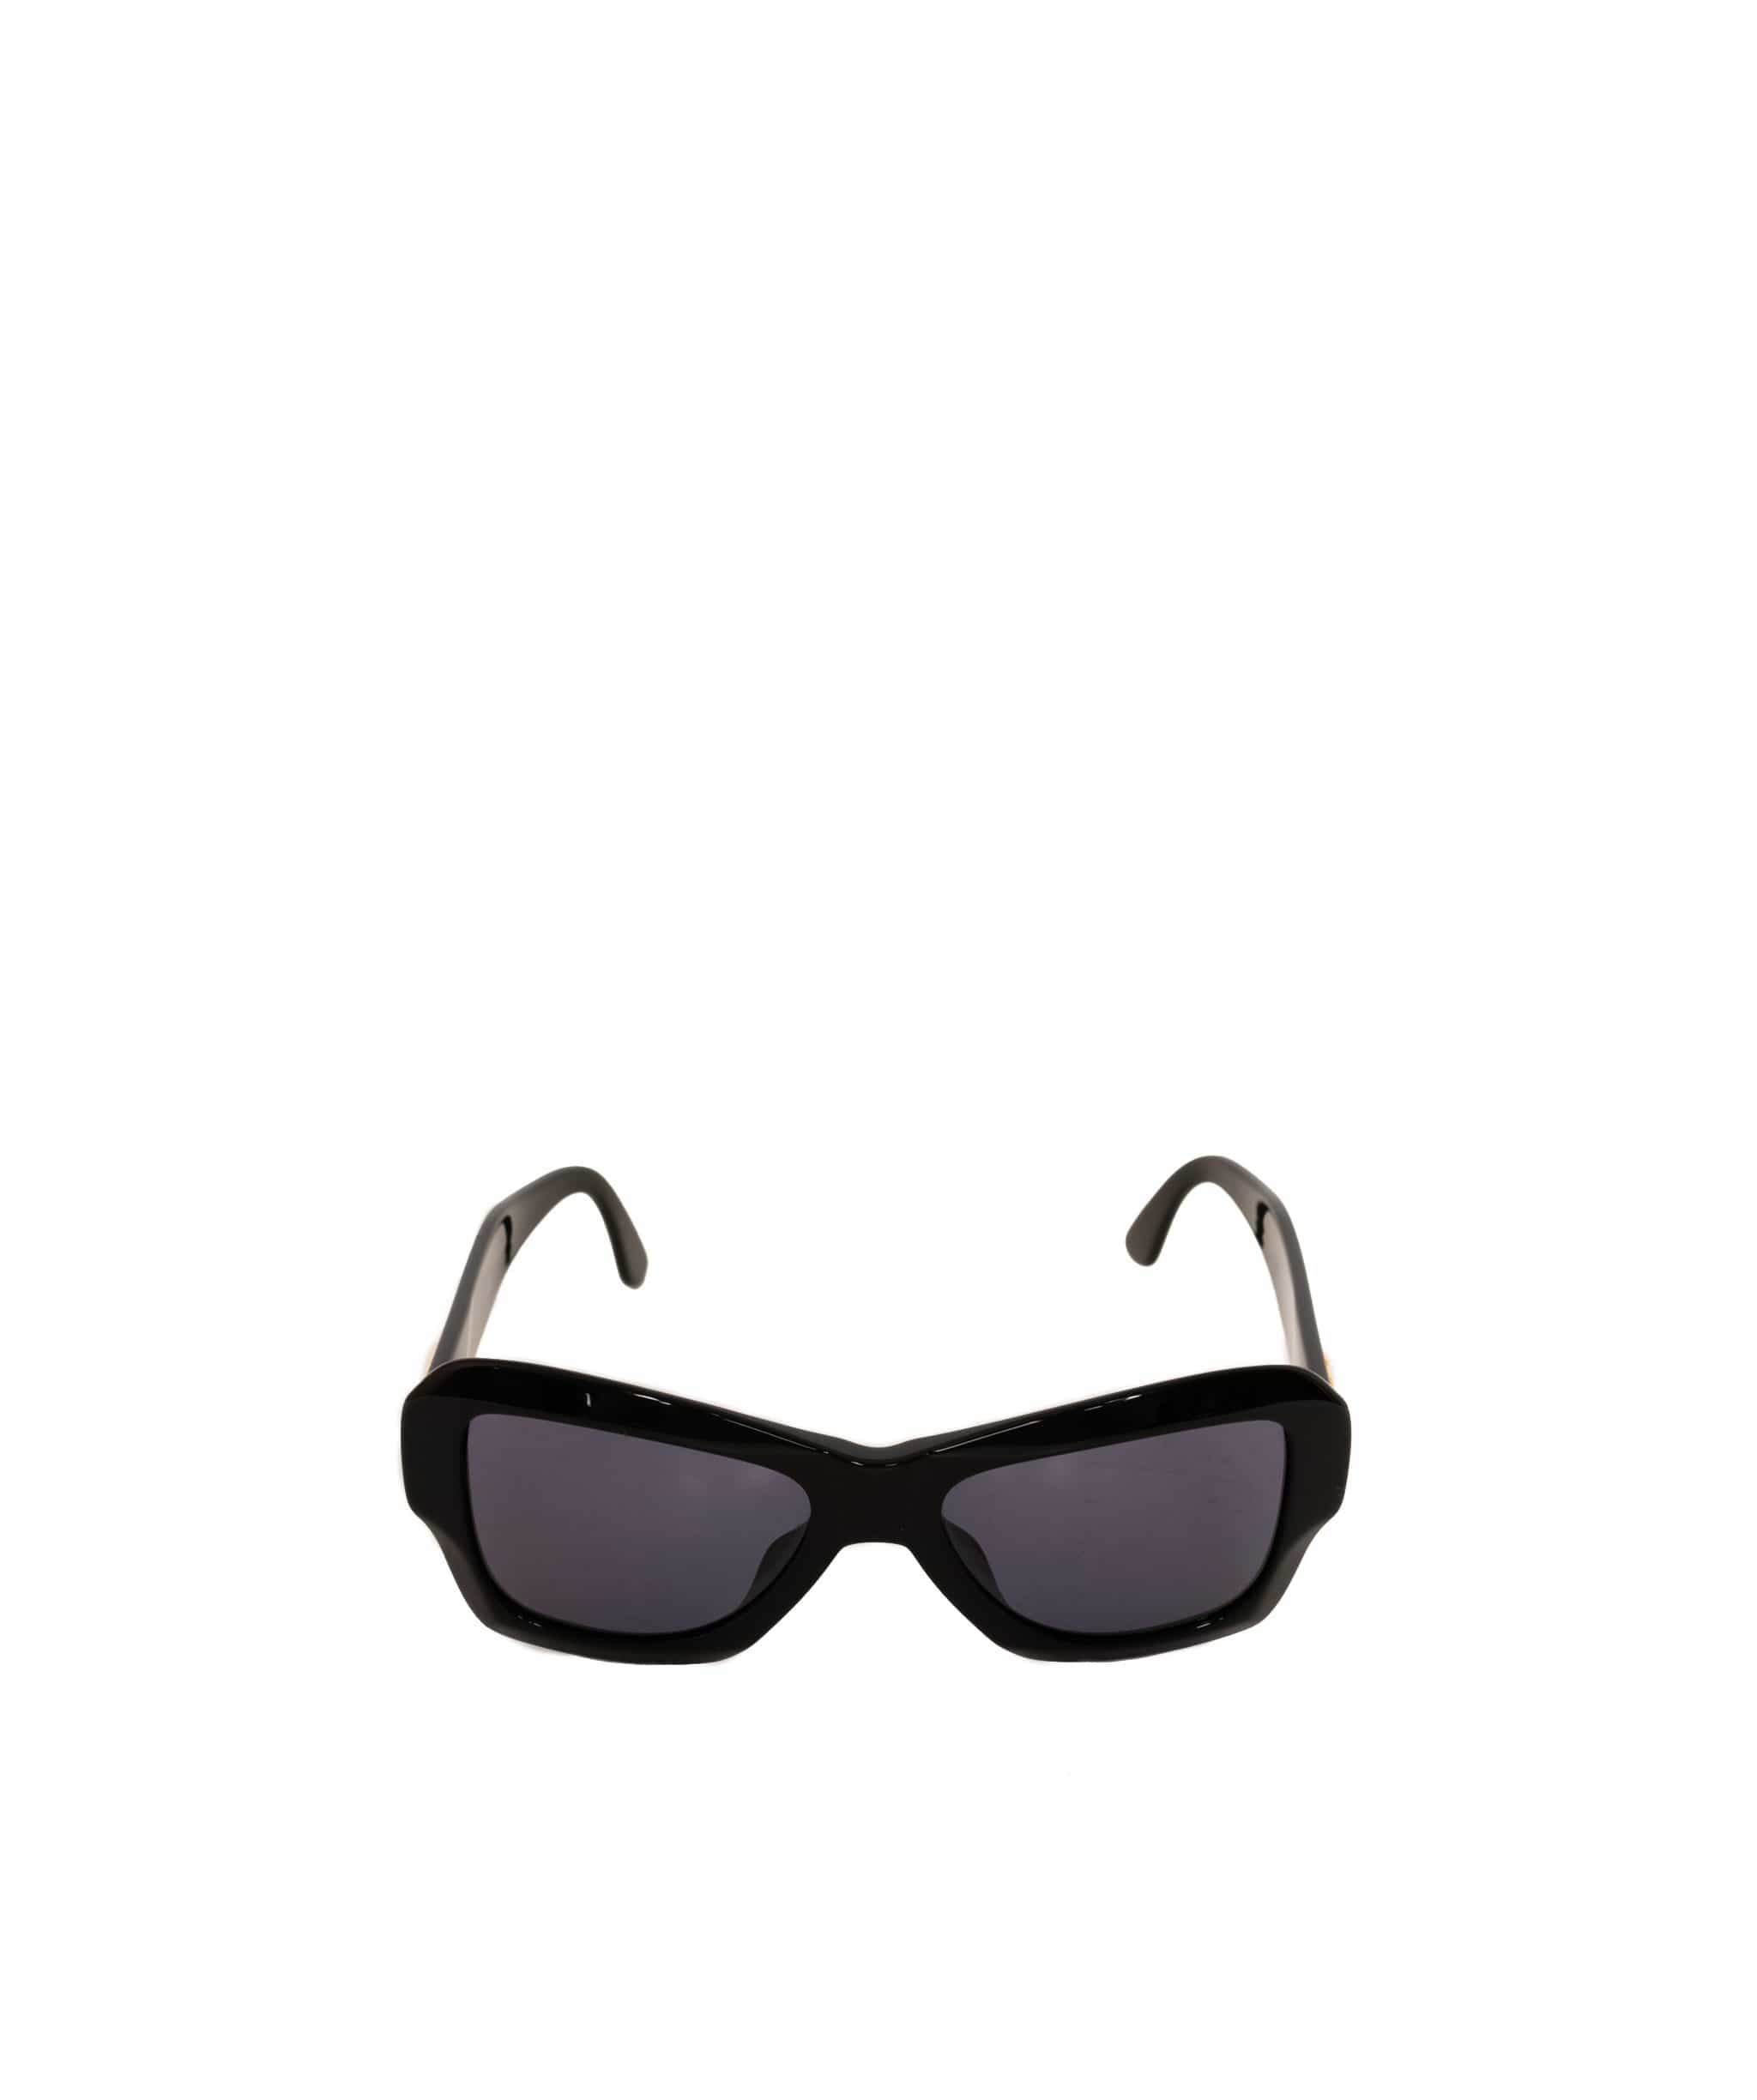 Chanel Chanel vintage Black frame sunglasses - AWL1166